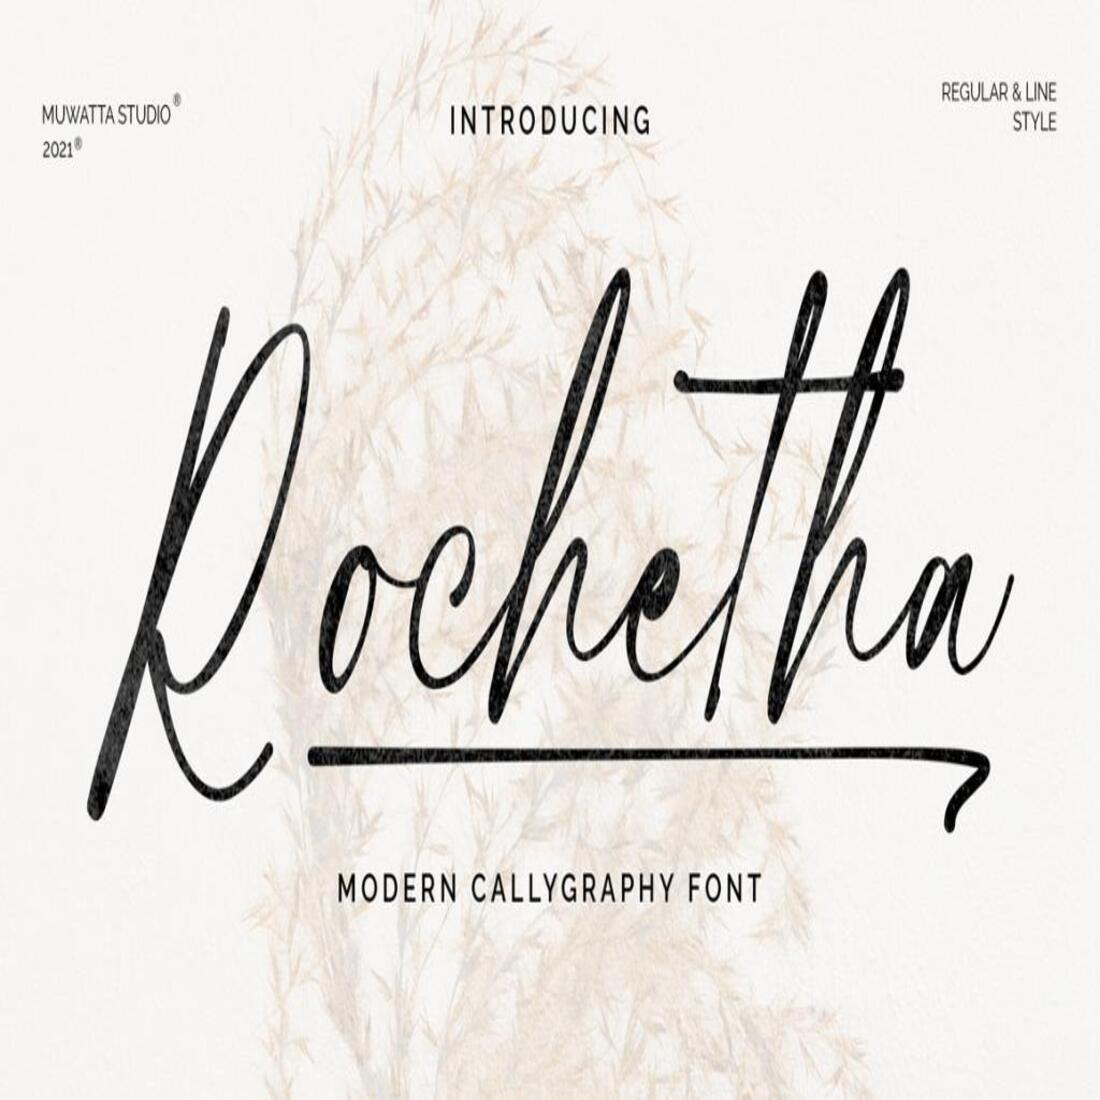 Rochetha cover image.